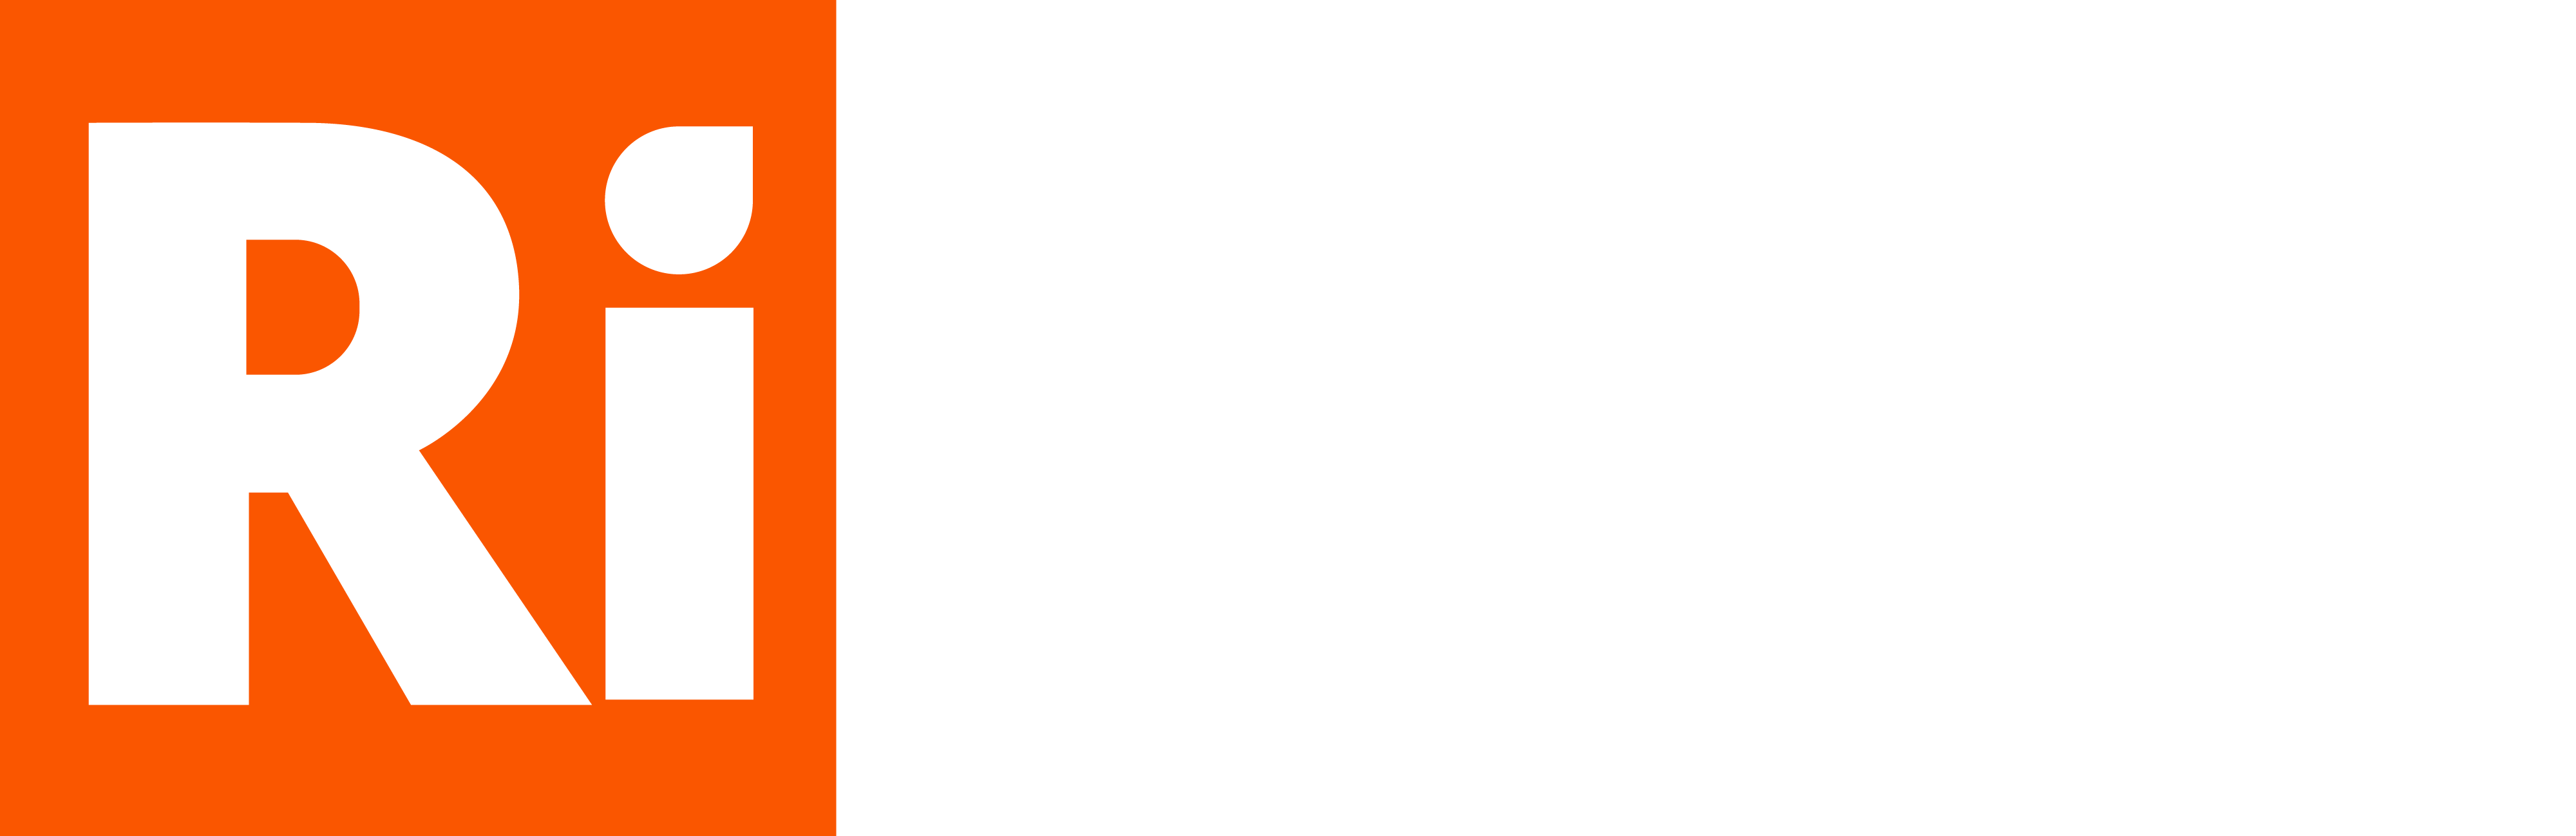 Retail-Insights-logo-orange